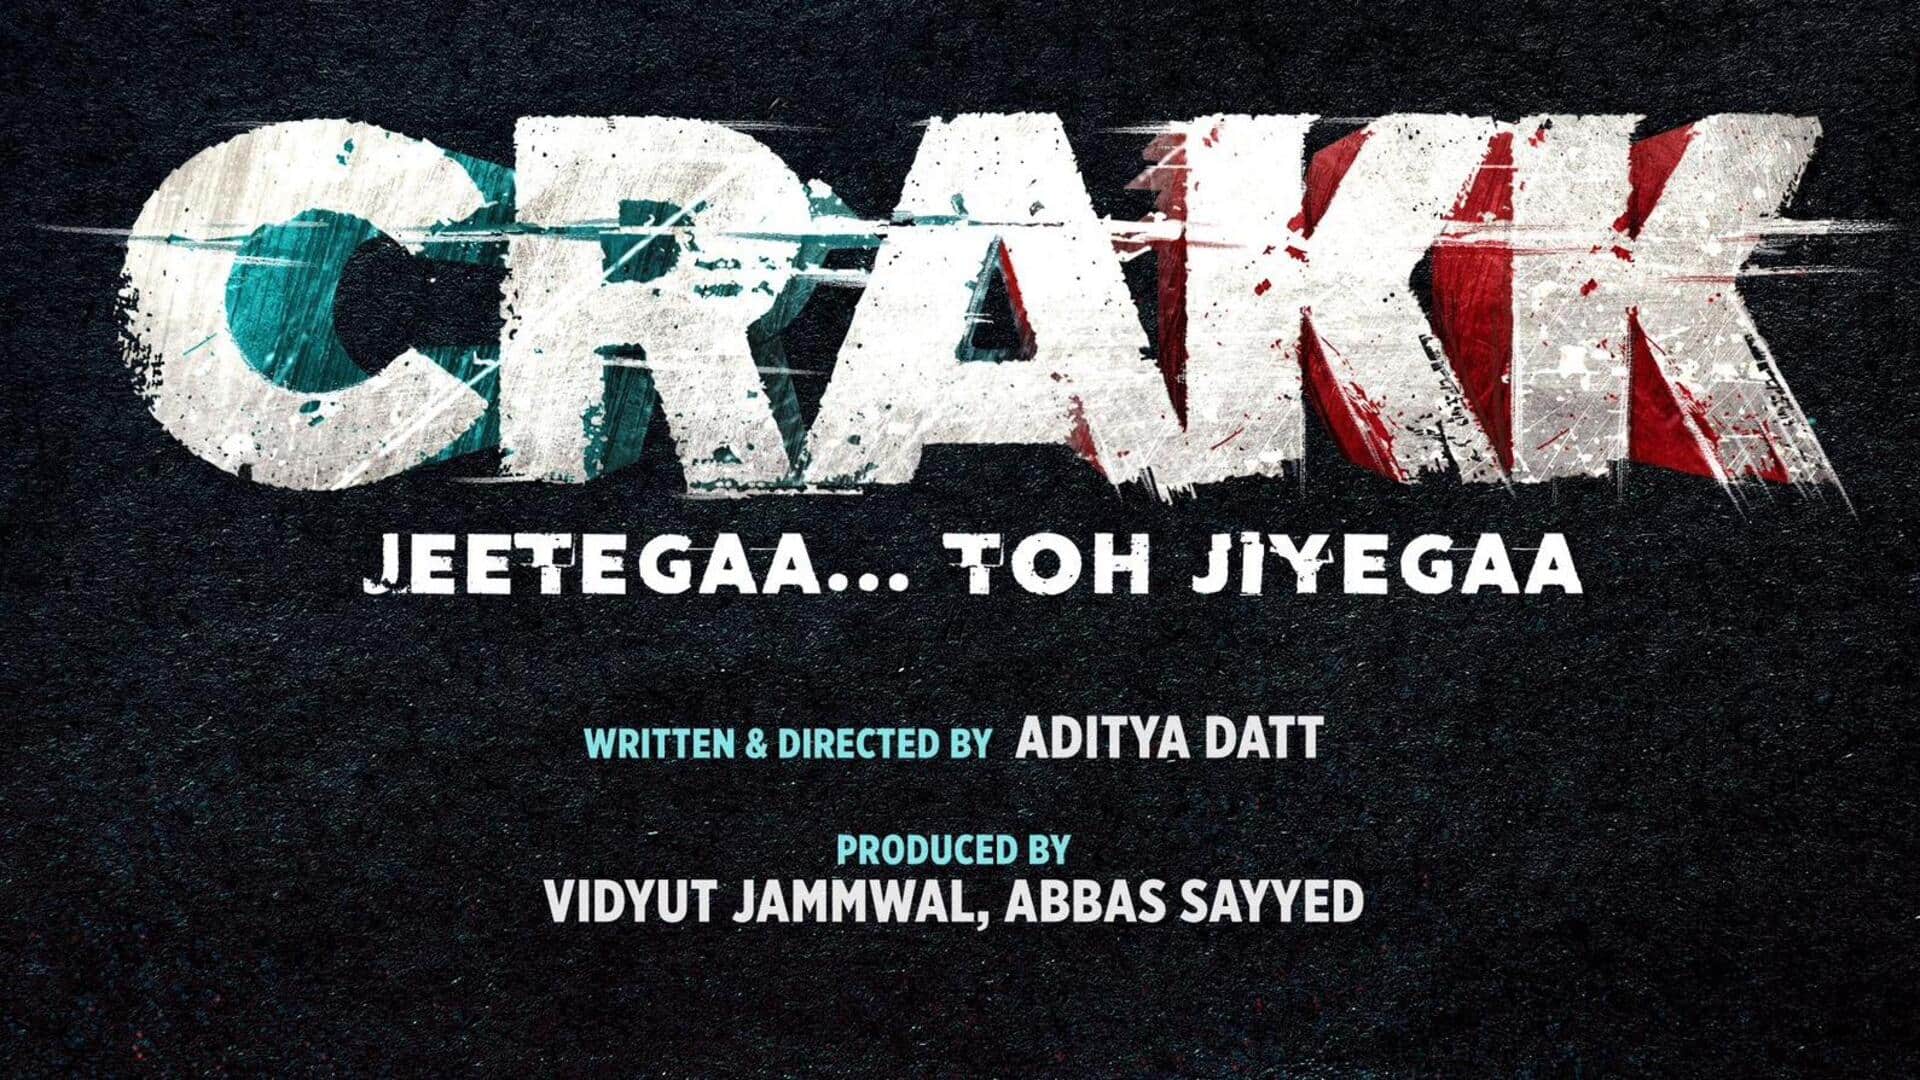 'Crakk': Here's when Vidyut Jammwal-Nora Fatehi's film will release